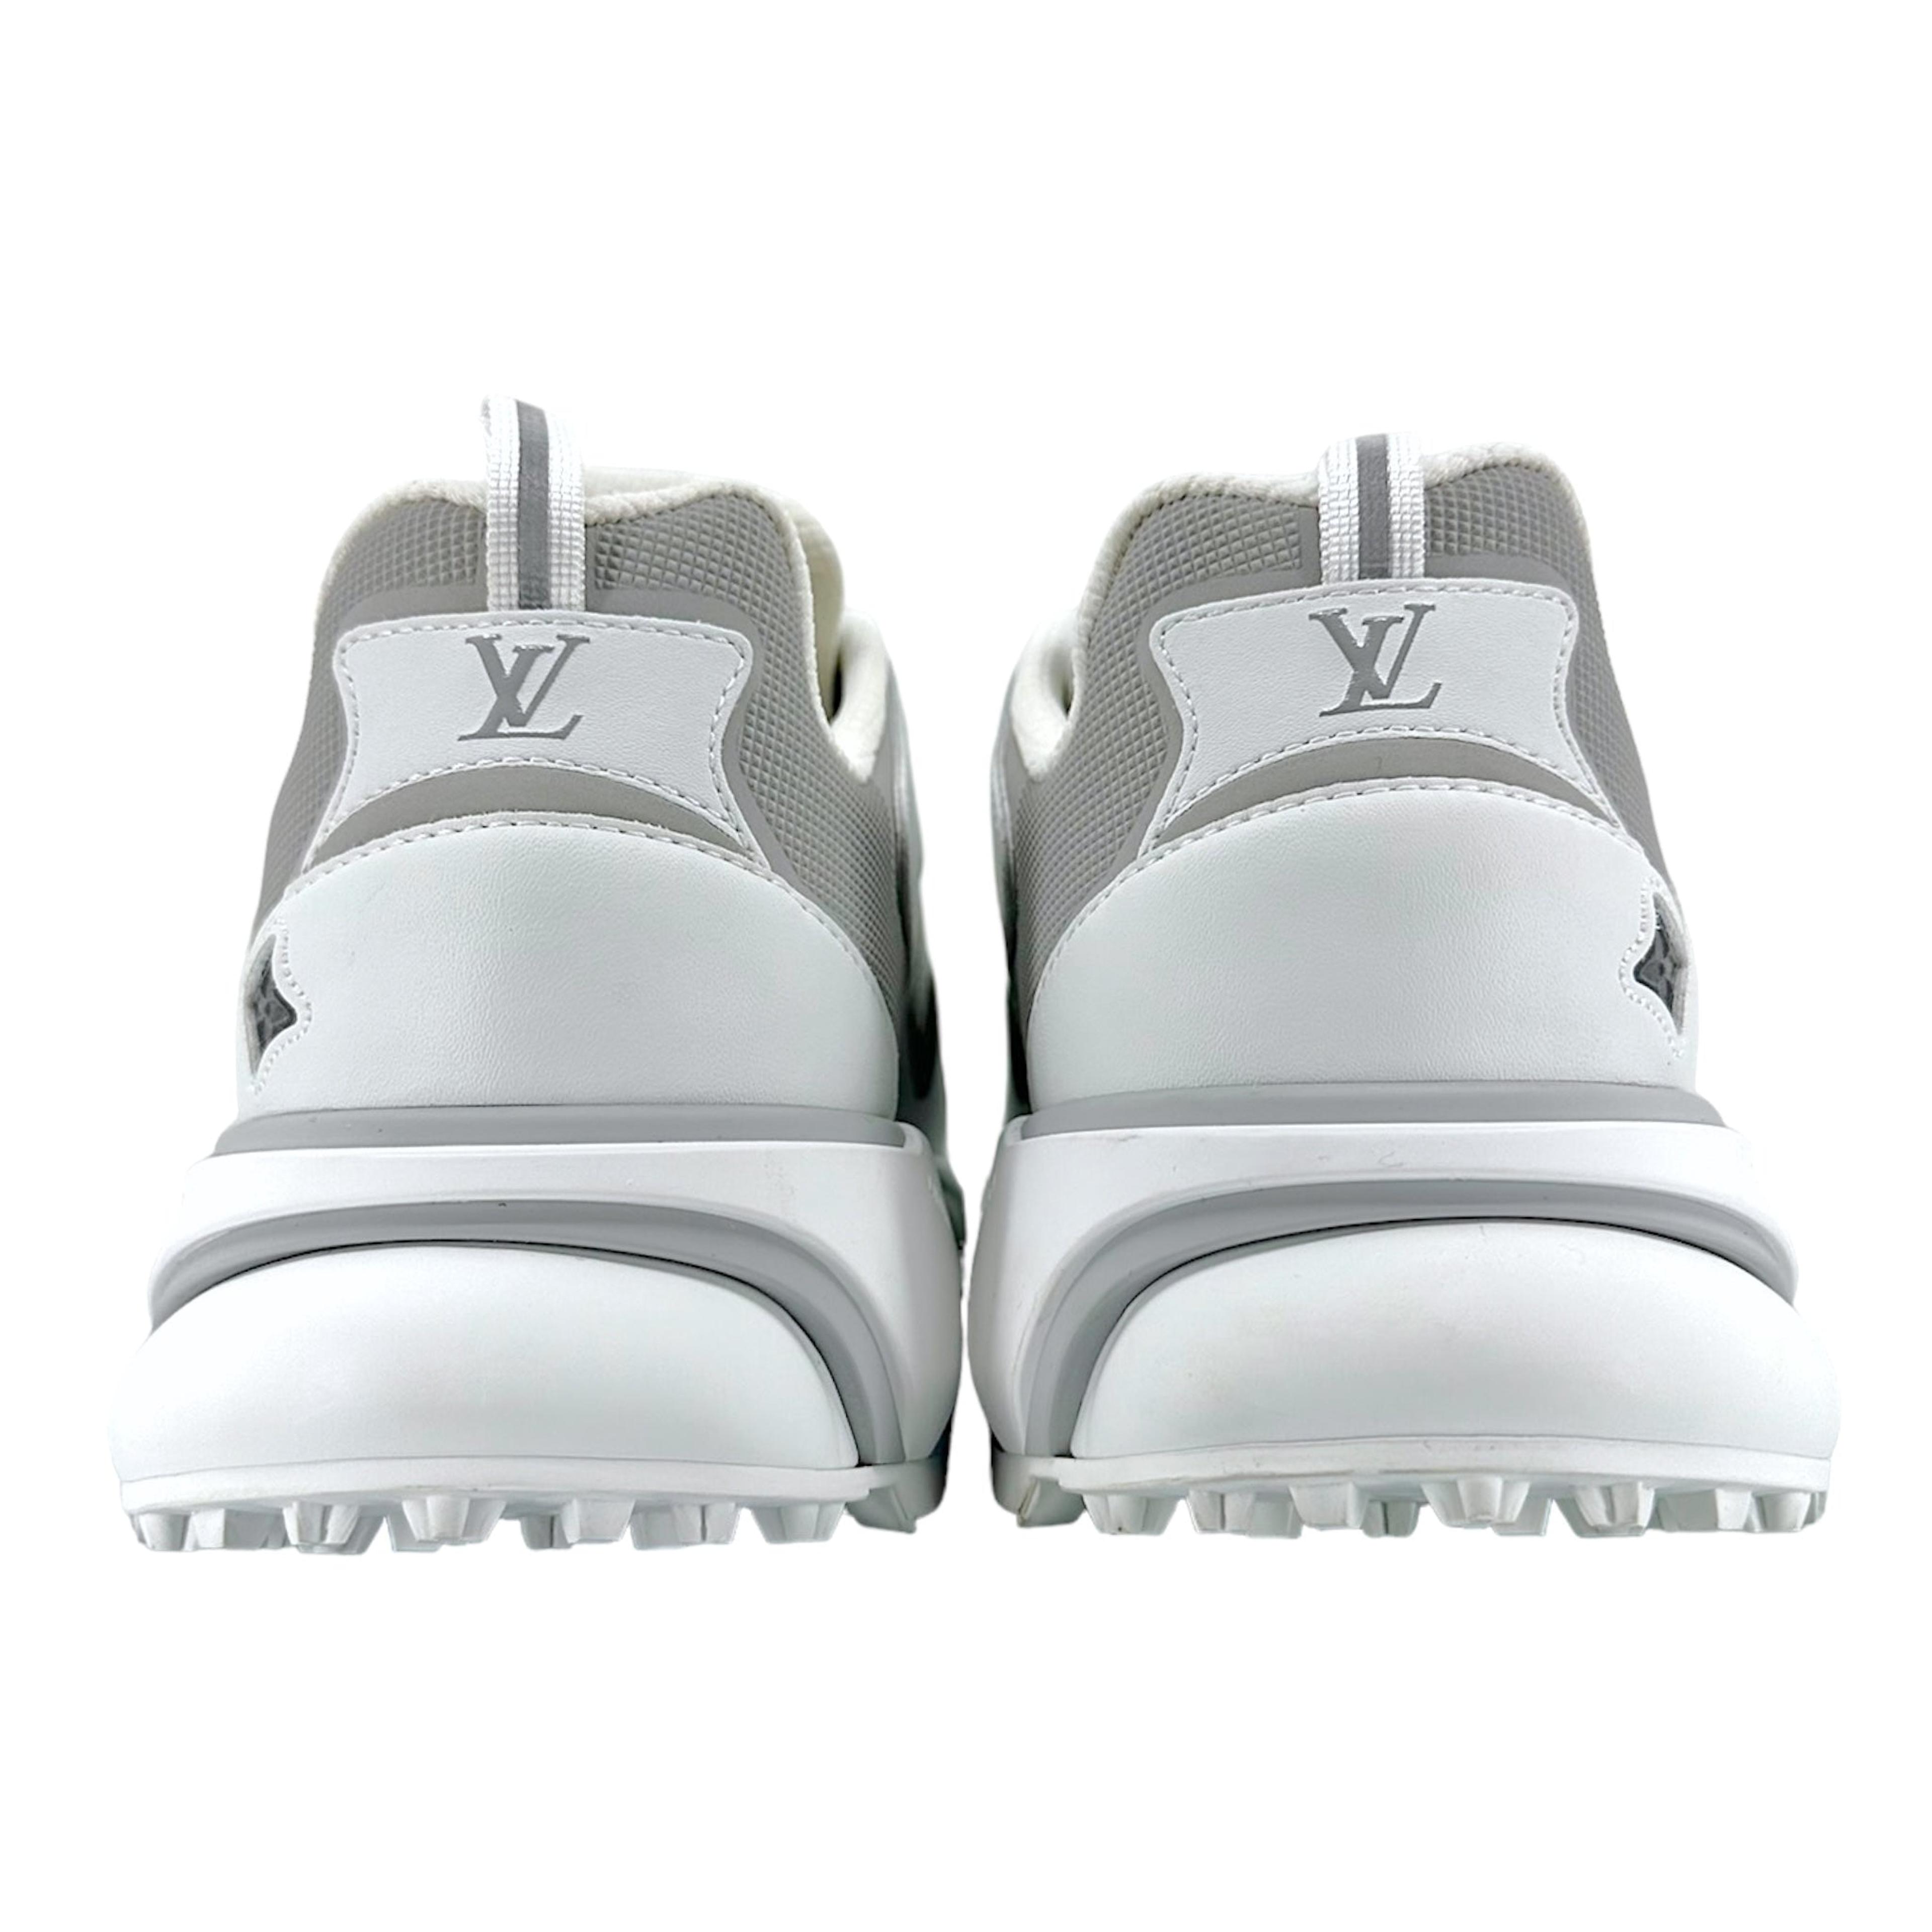 Alternate View 5 of Louis Vuitton Runner Tatic Sneaker White Grey